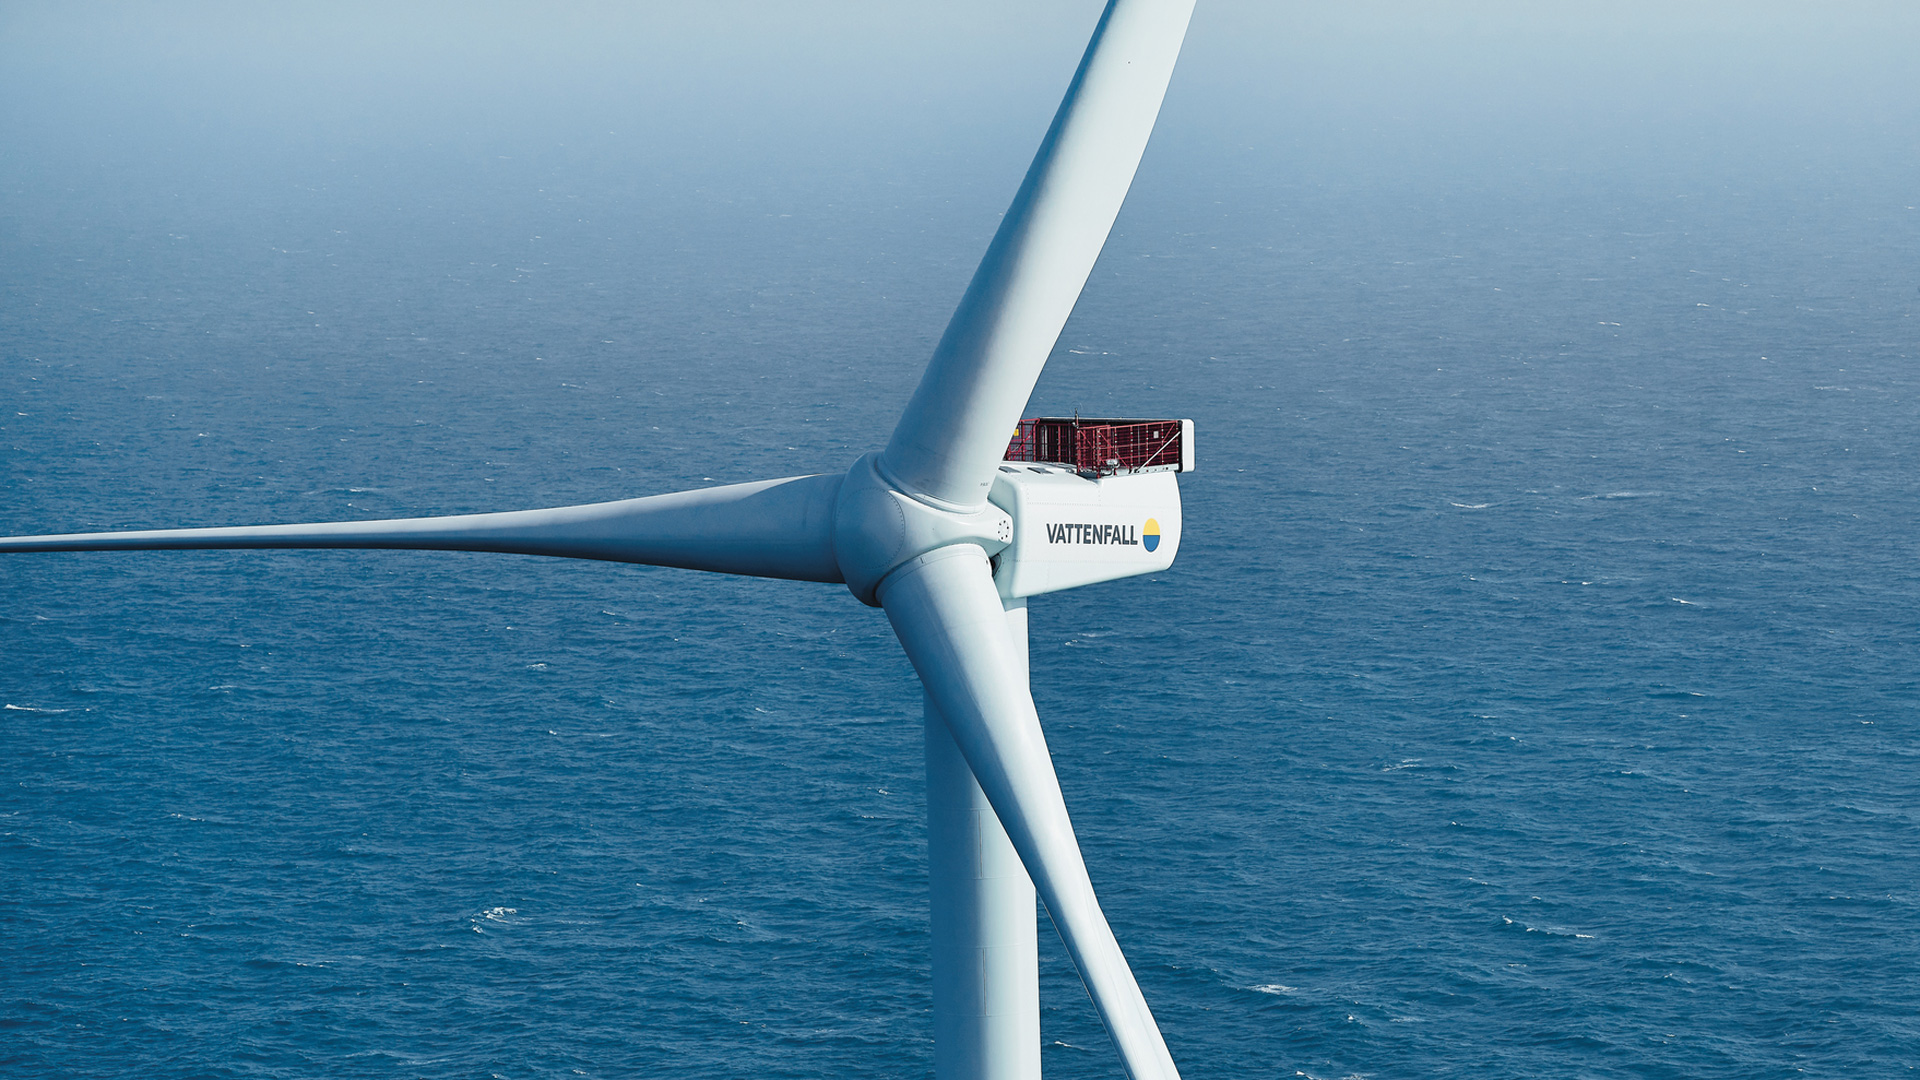 Horns Rev 3 offshore wind farm in the North Sea